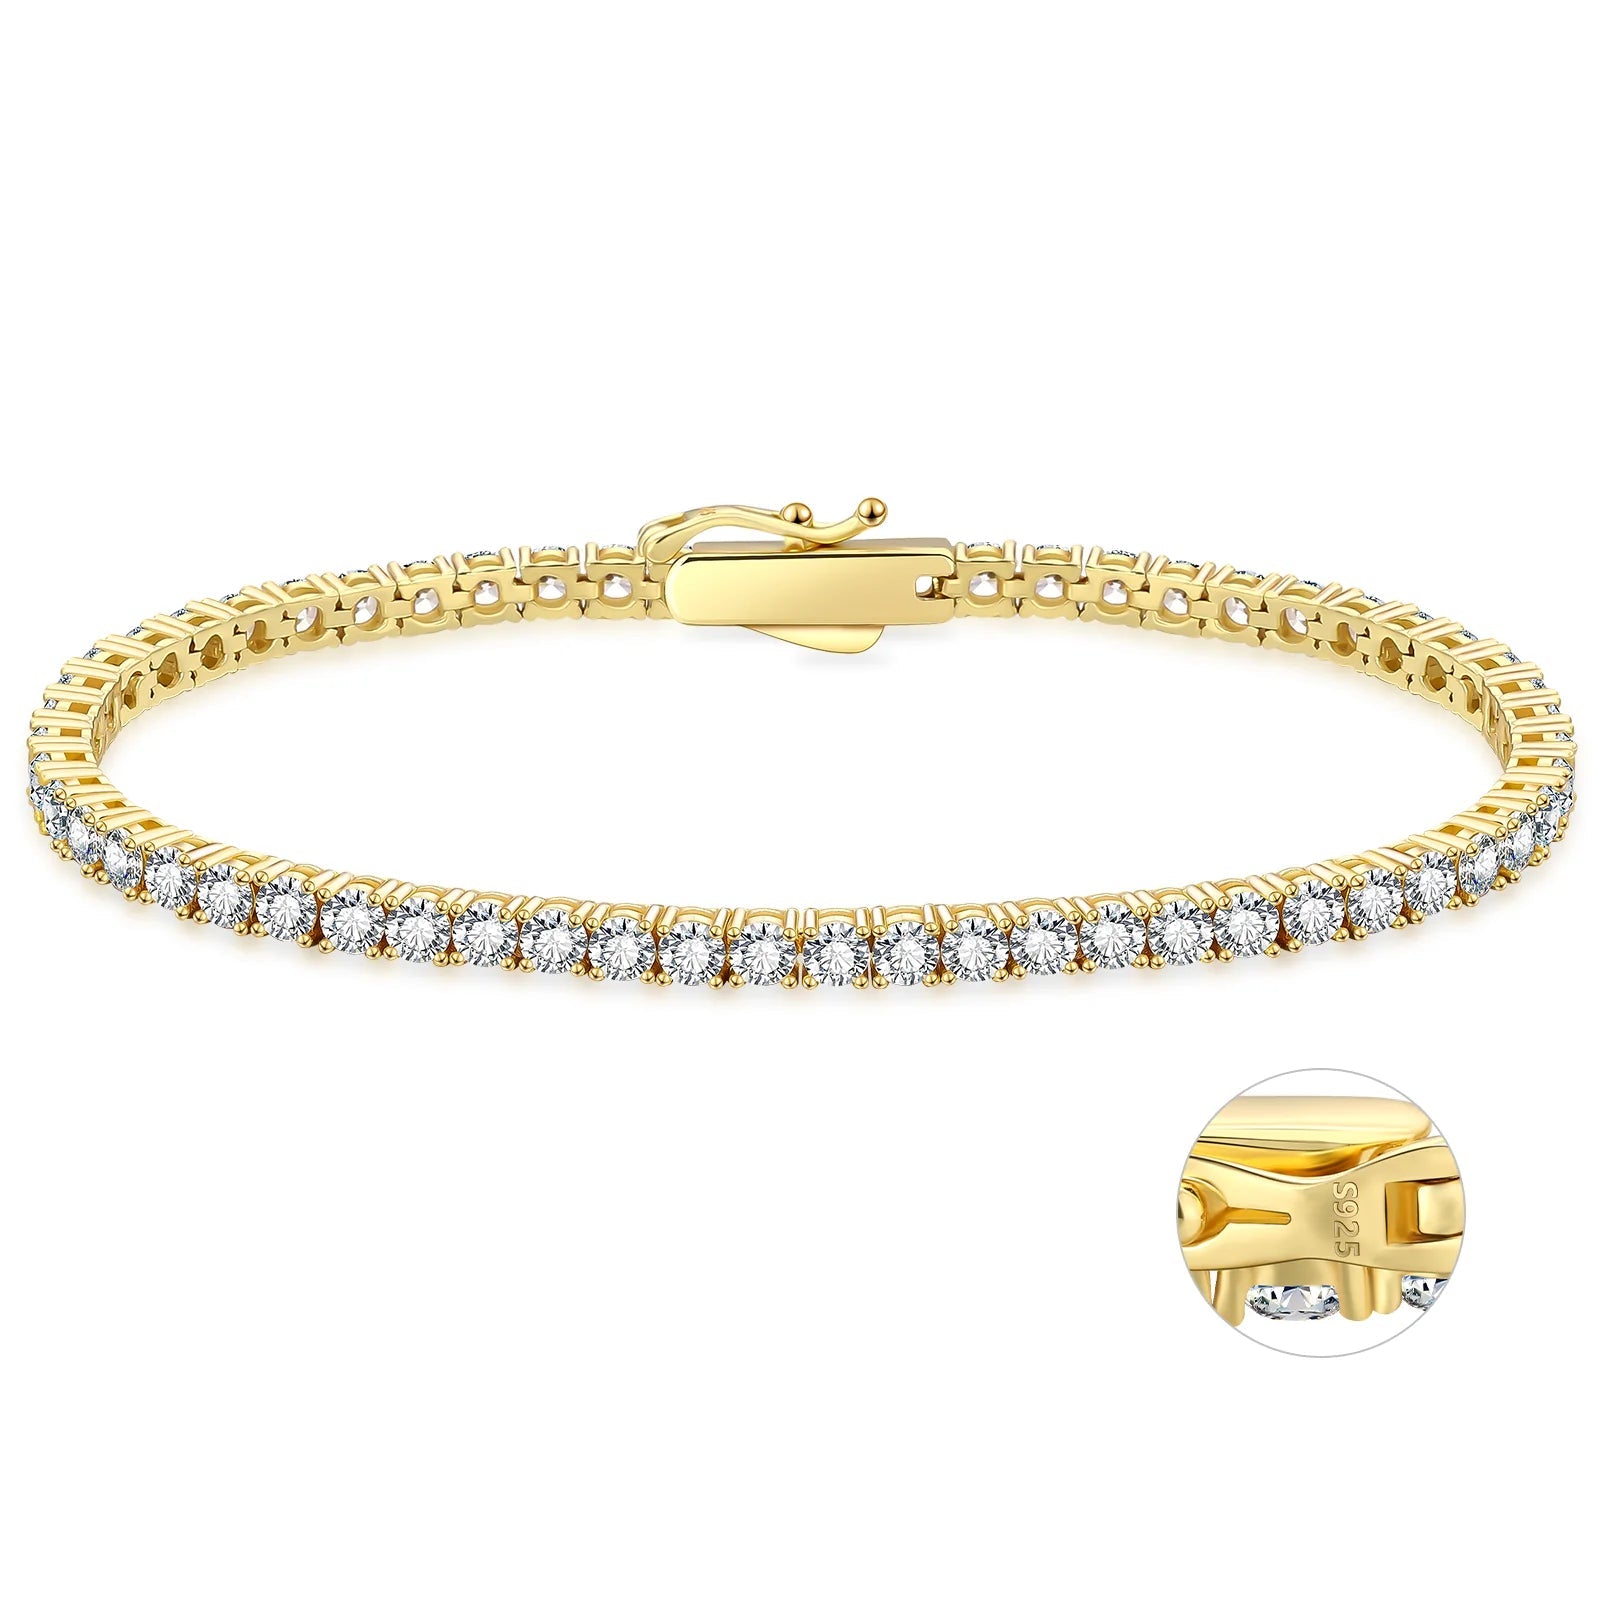 S925 Silver CZ Diamond Tennis Bracelet in 14K Gold - 3mm Bracelets 7" 925 Sterling Silver 14K Gold